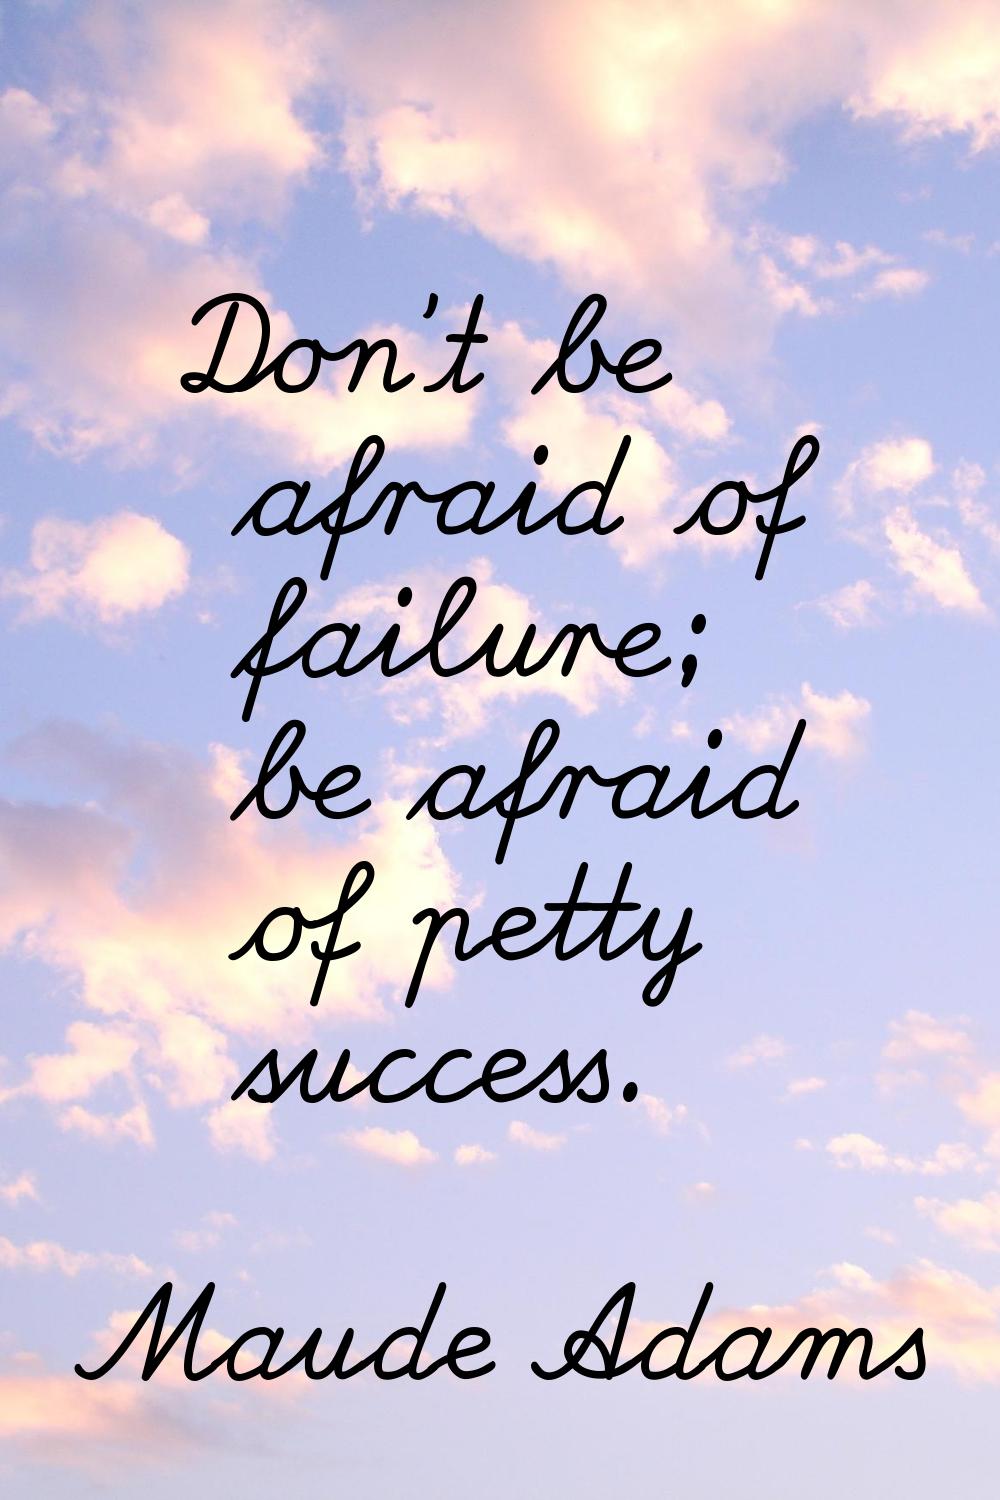 Don't be afraid of failure; be afraid of petty success.